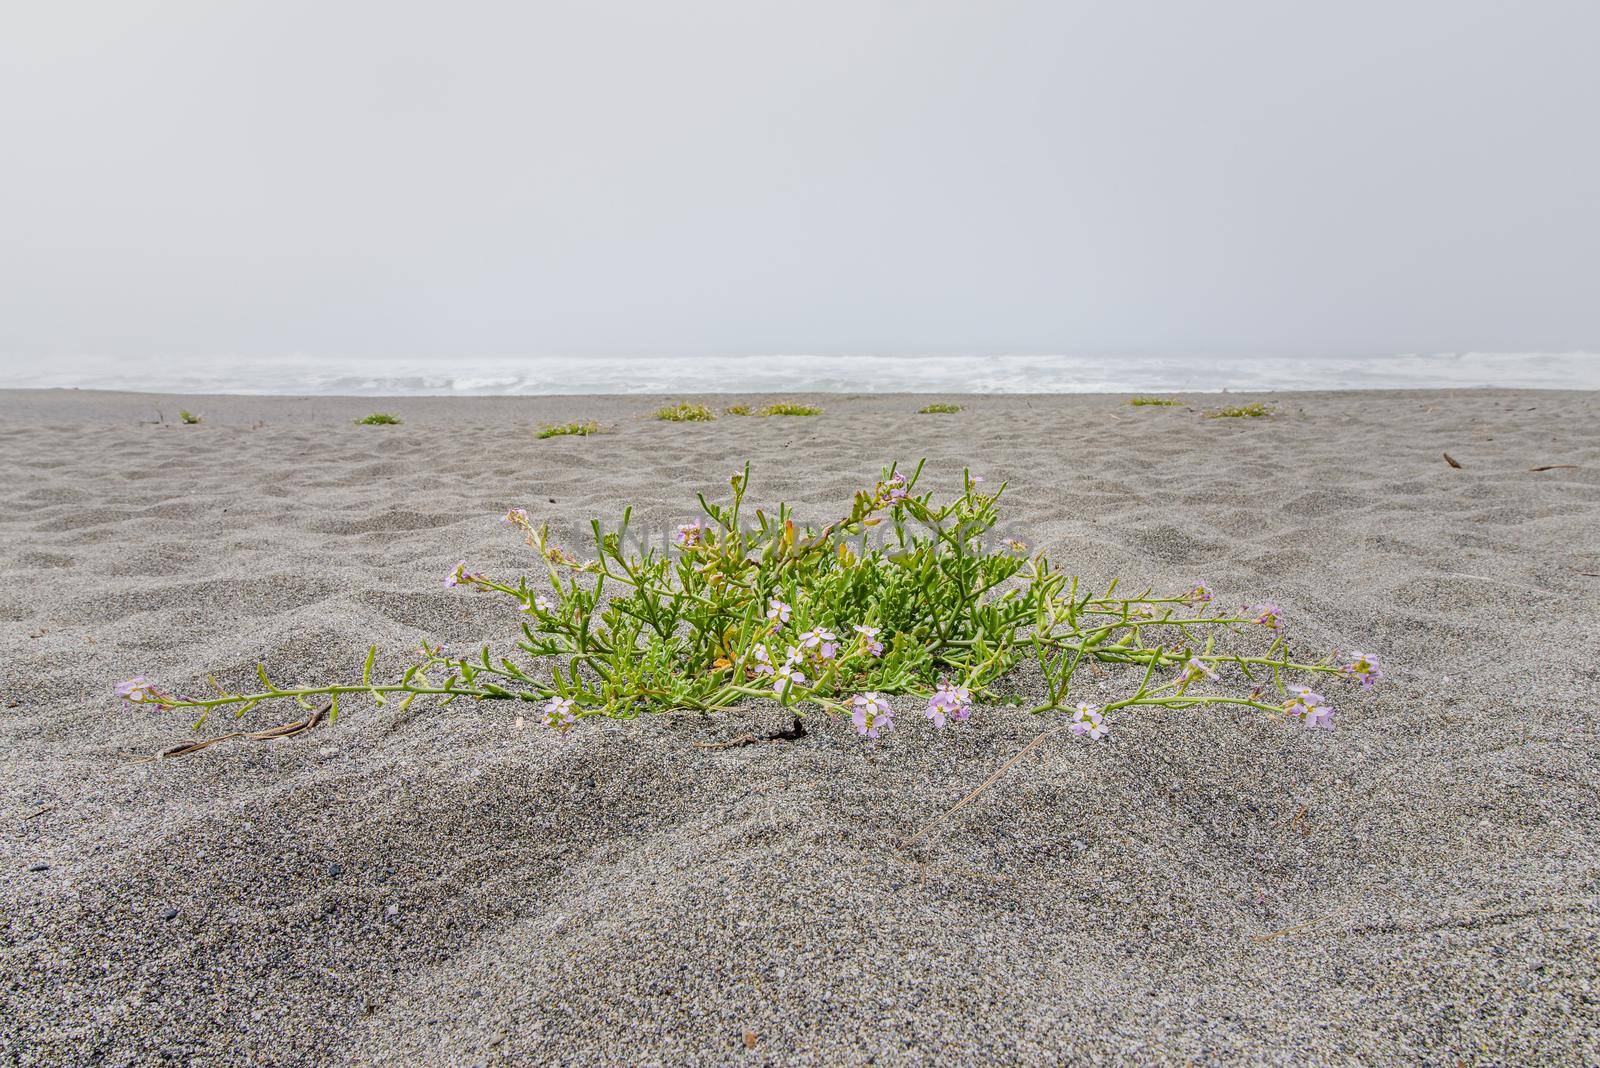 American sea rocket (Cakile edentula) is common on Californian beaches.